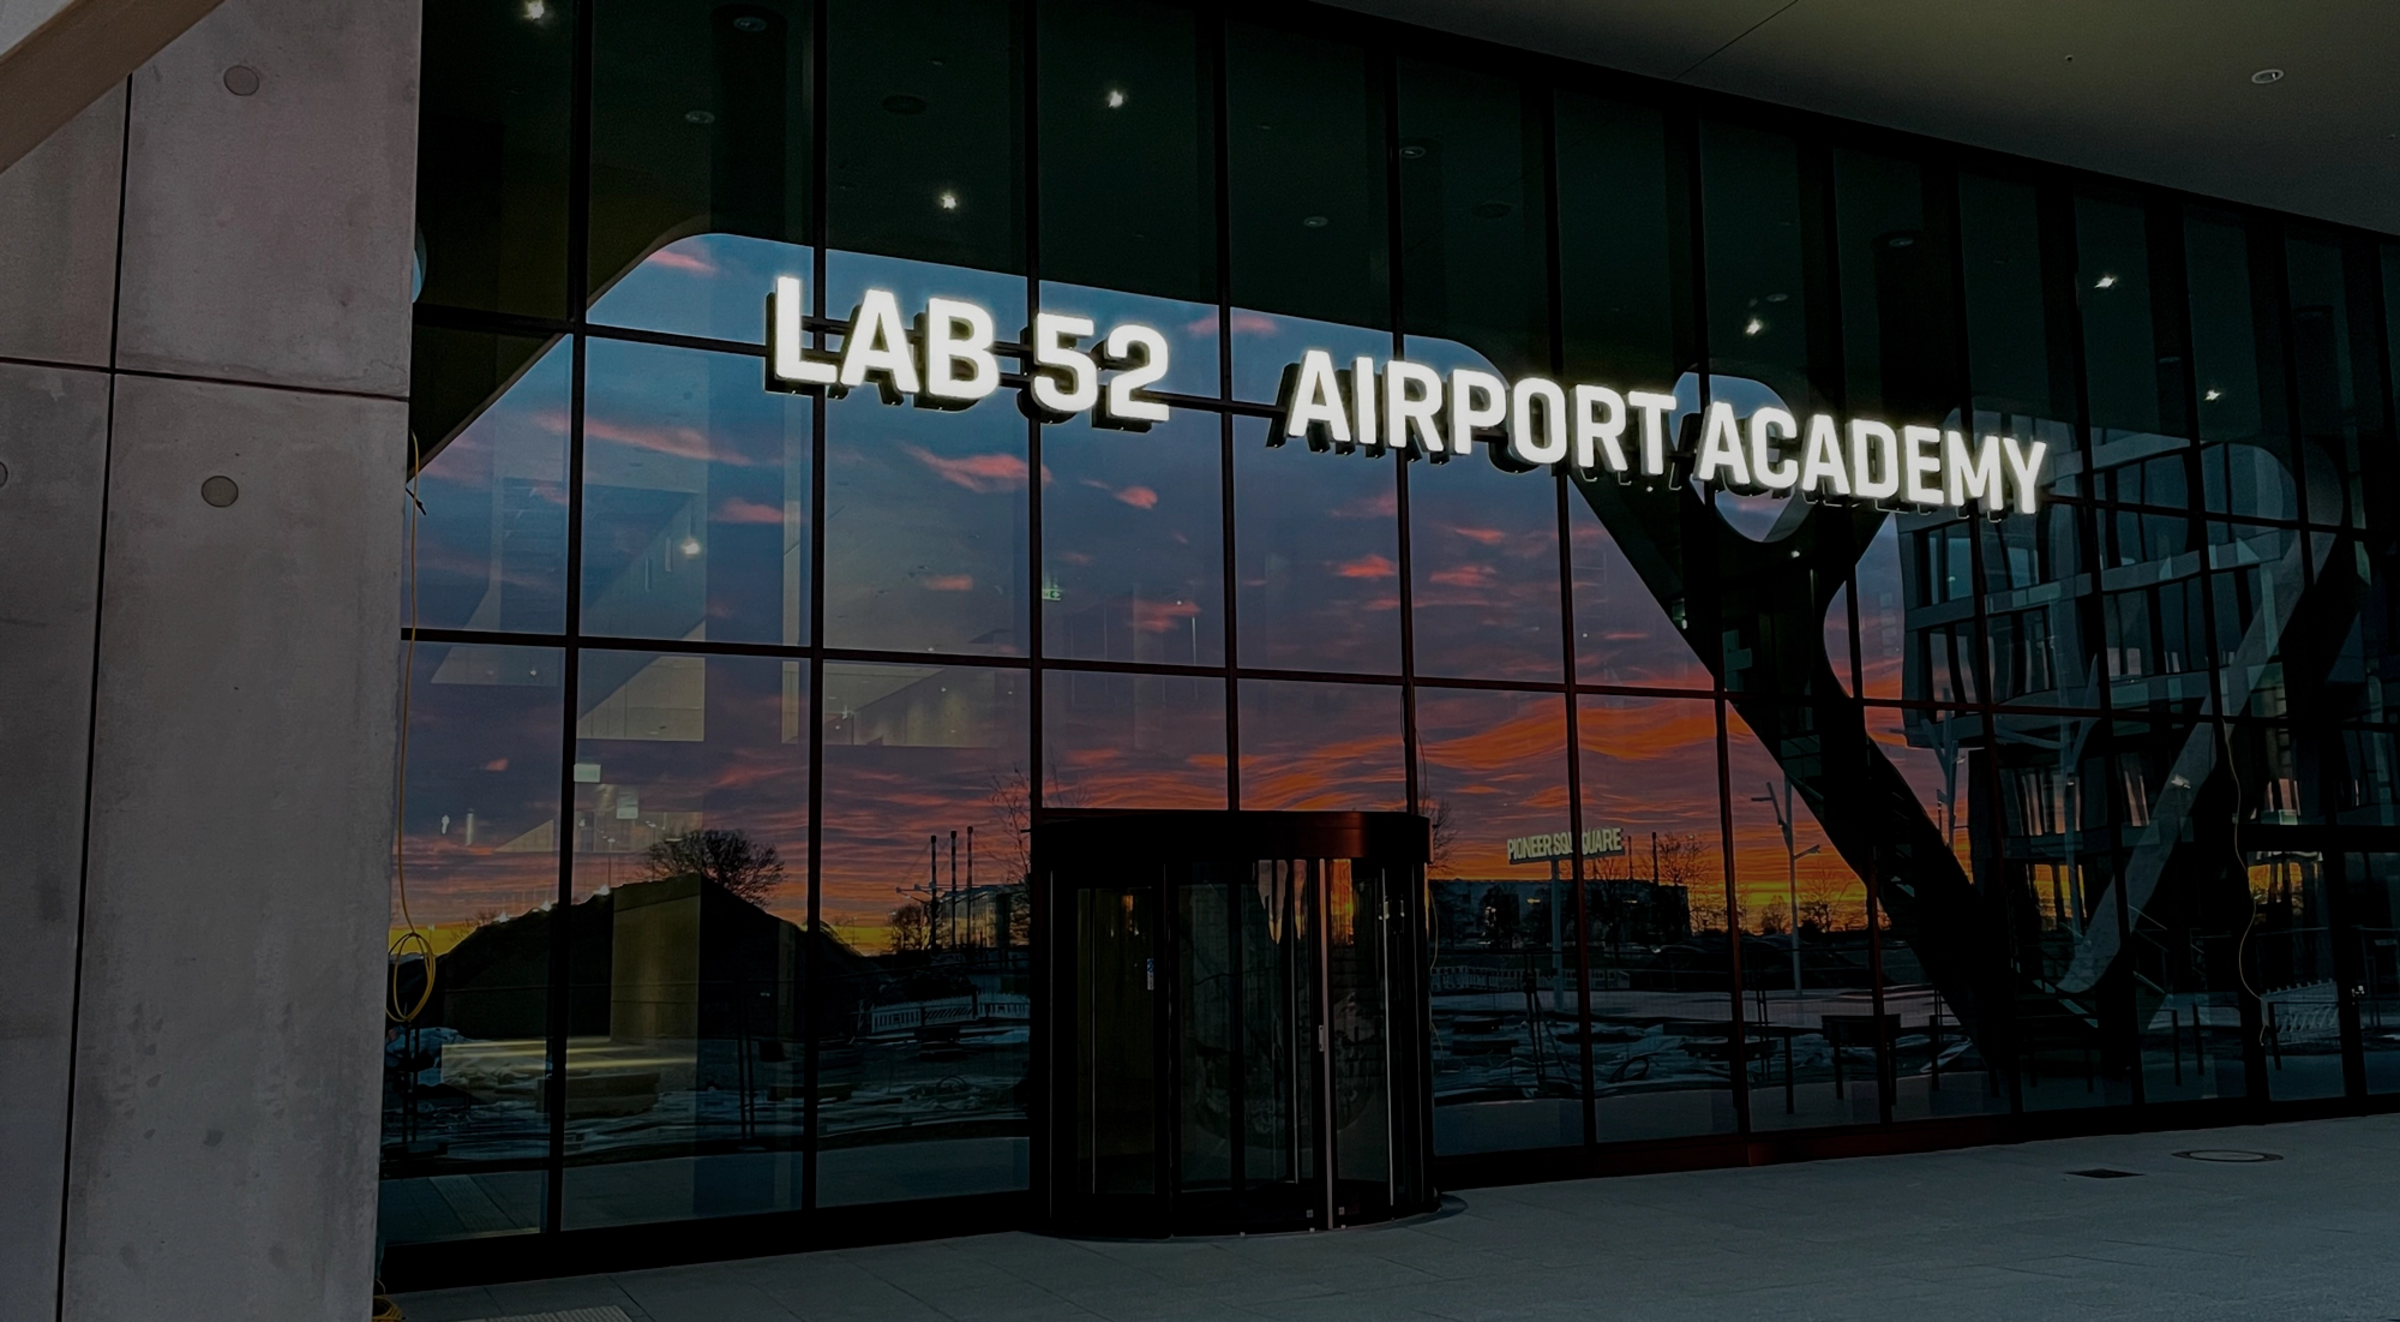 Airport Academy